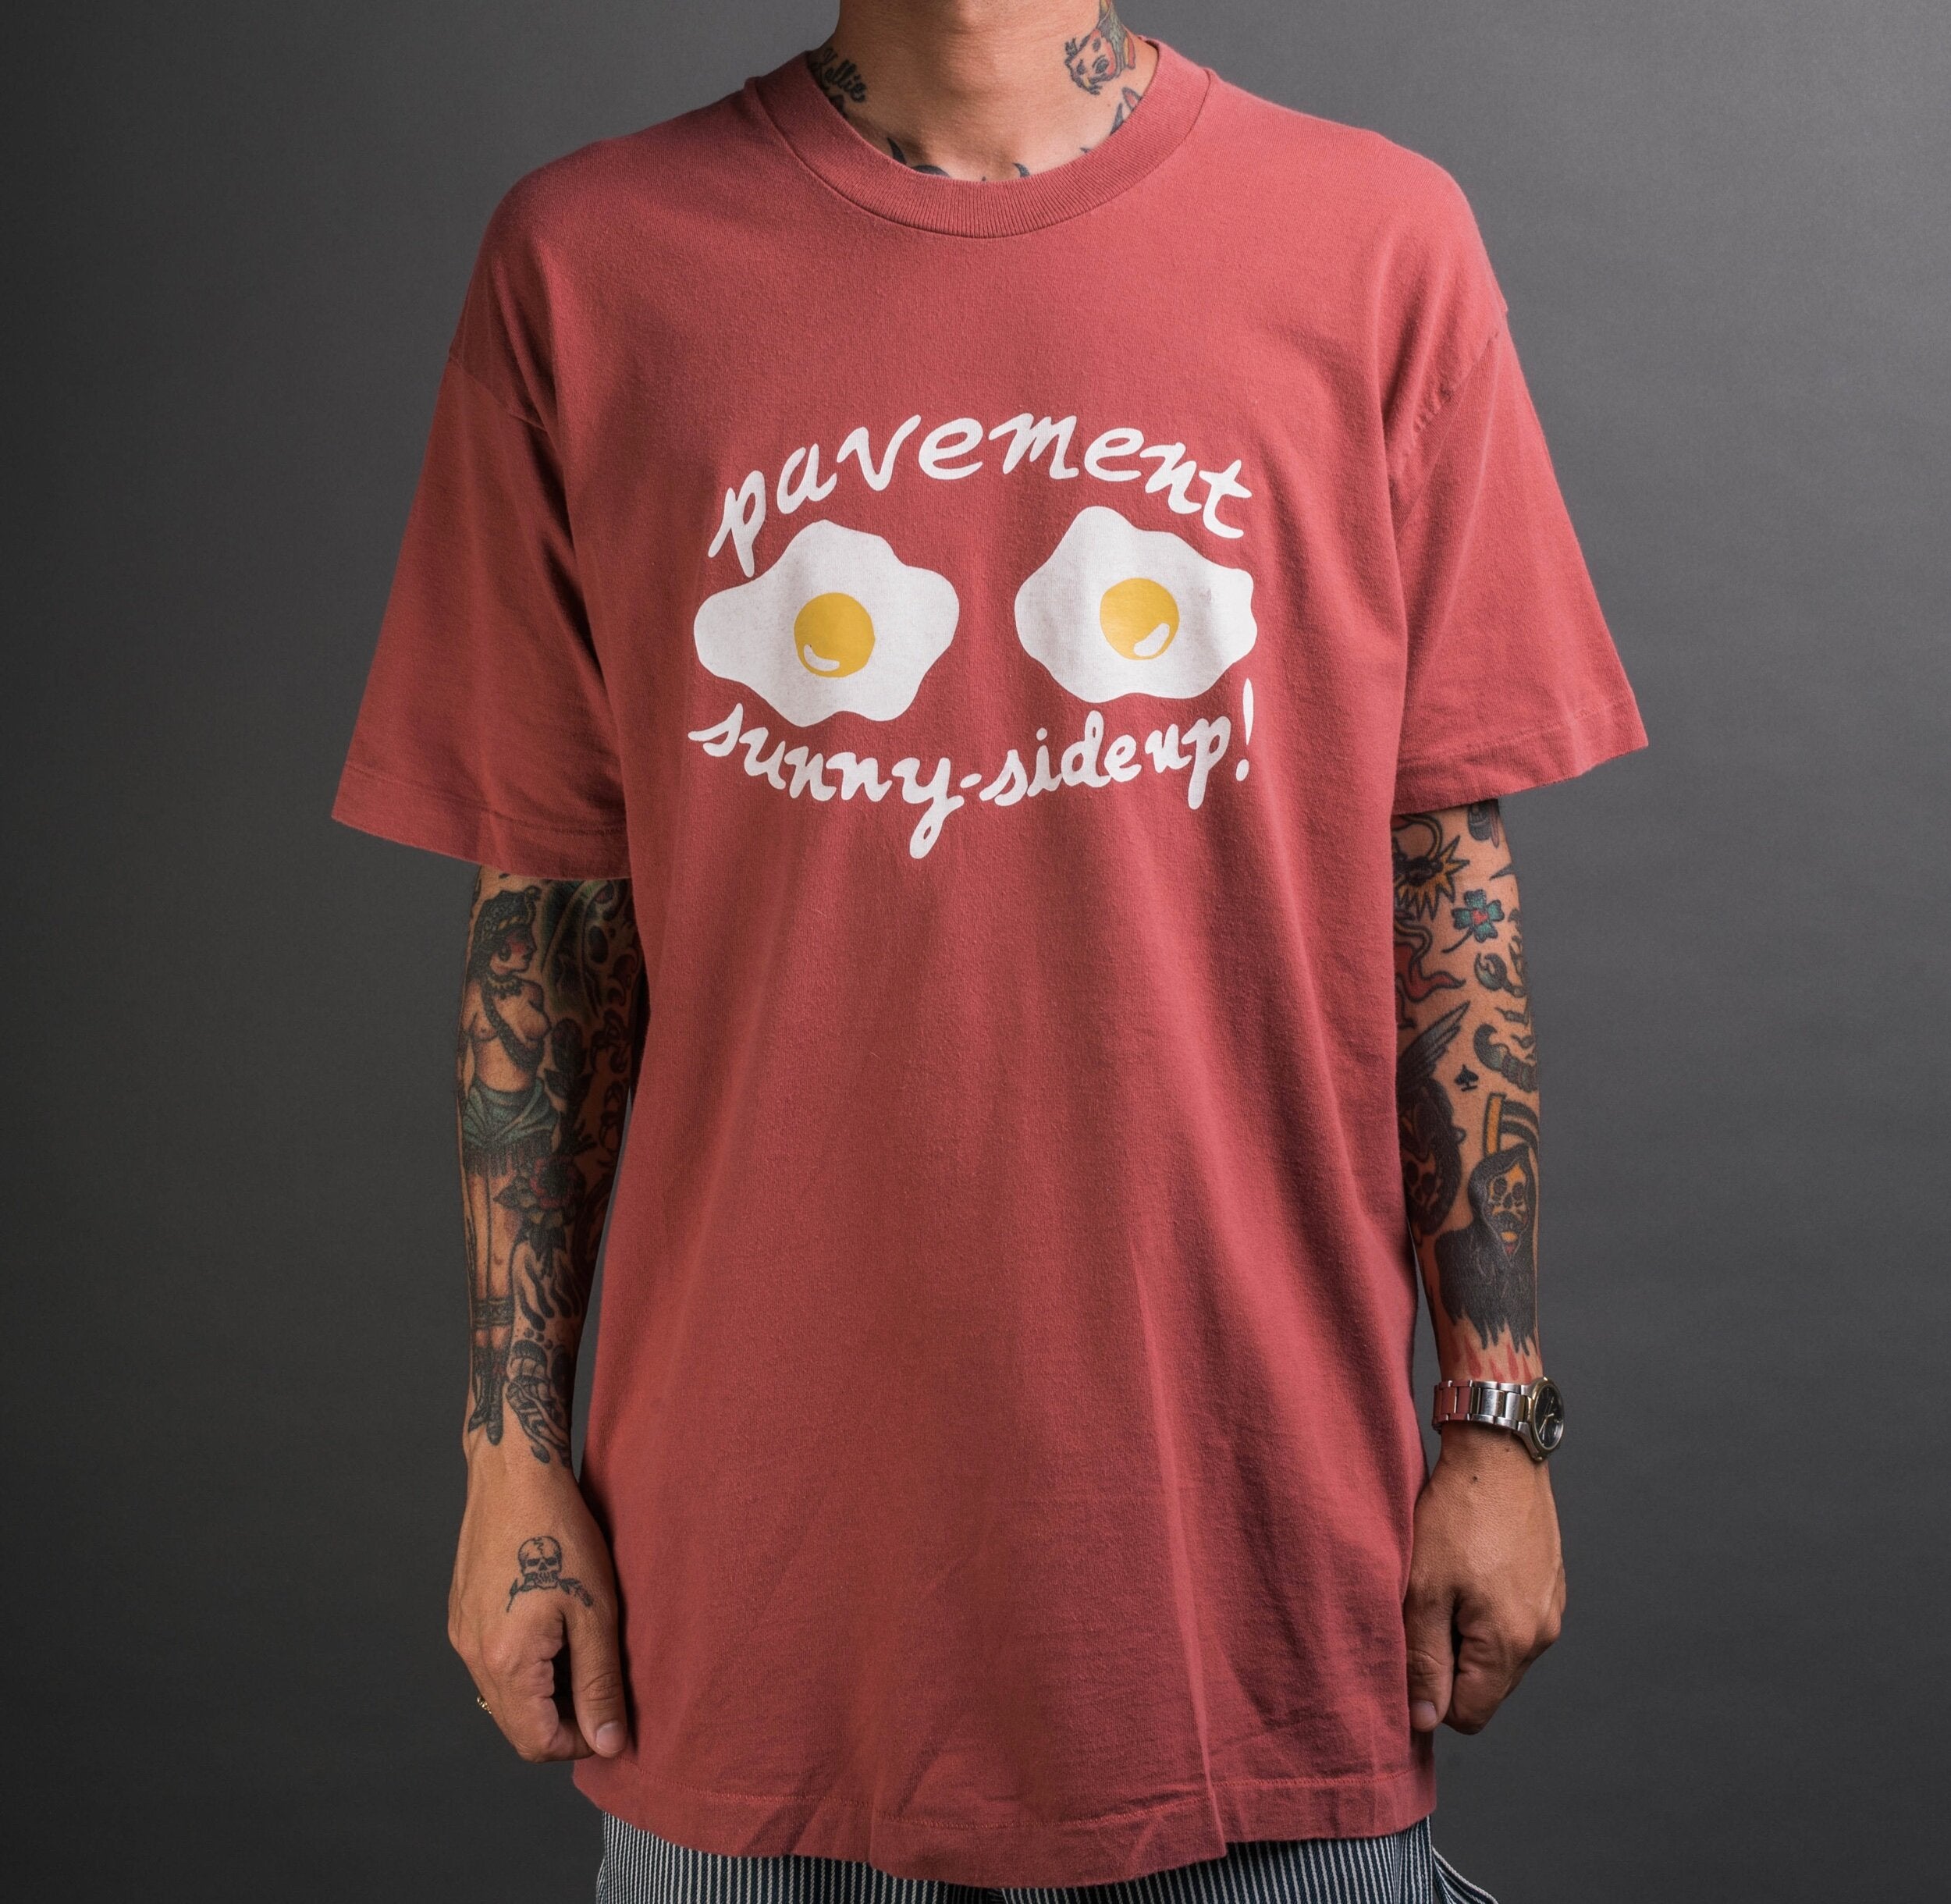 Vintage 90’s Pavement Sunny Side Up T-Shirt